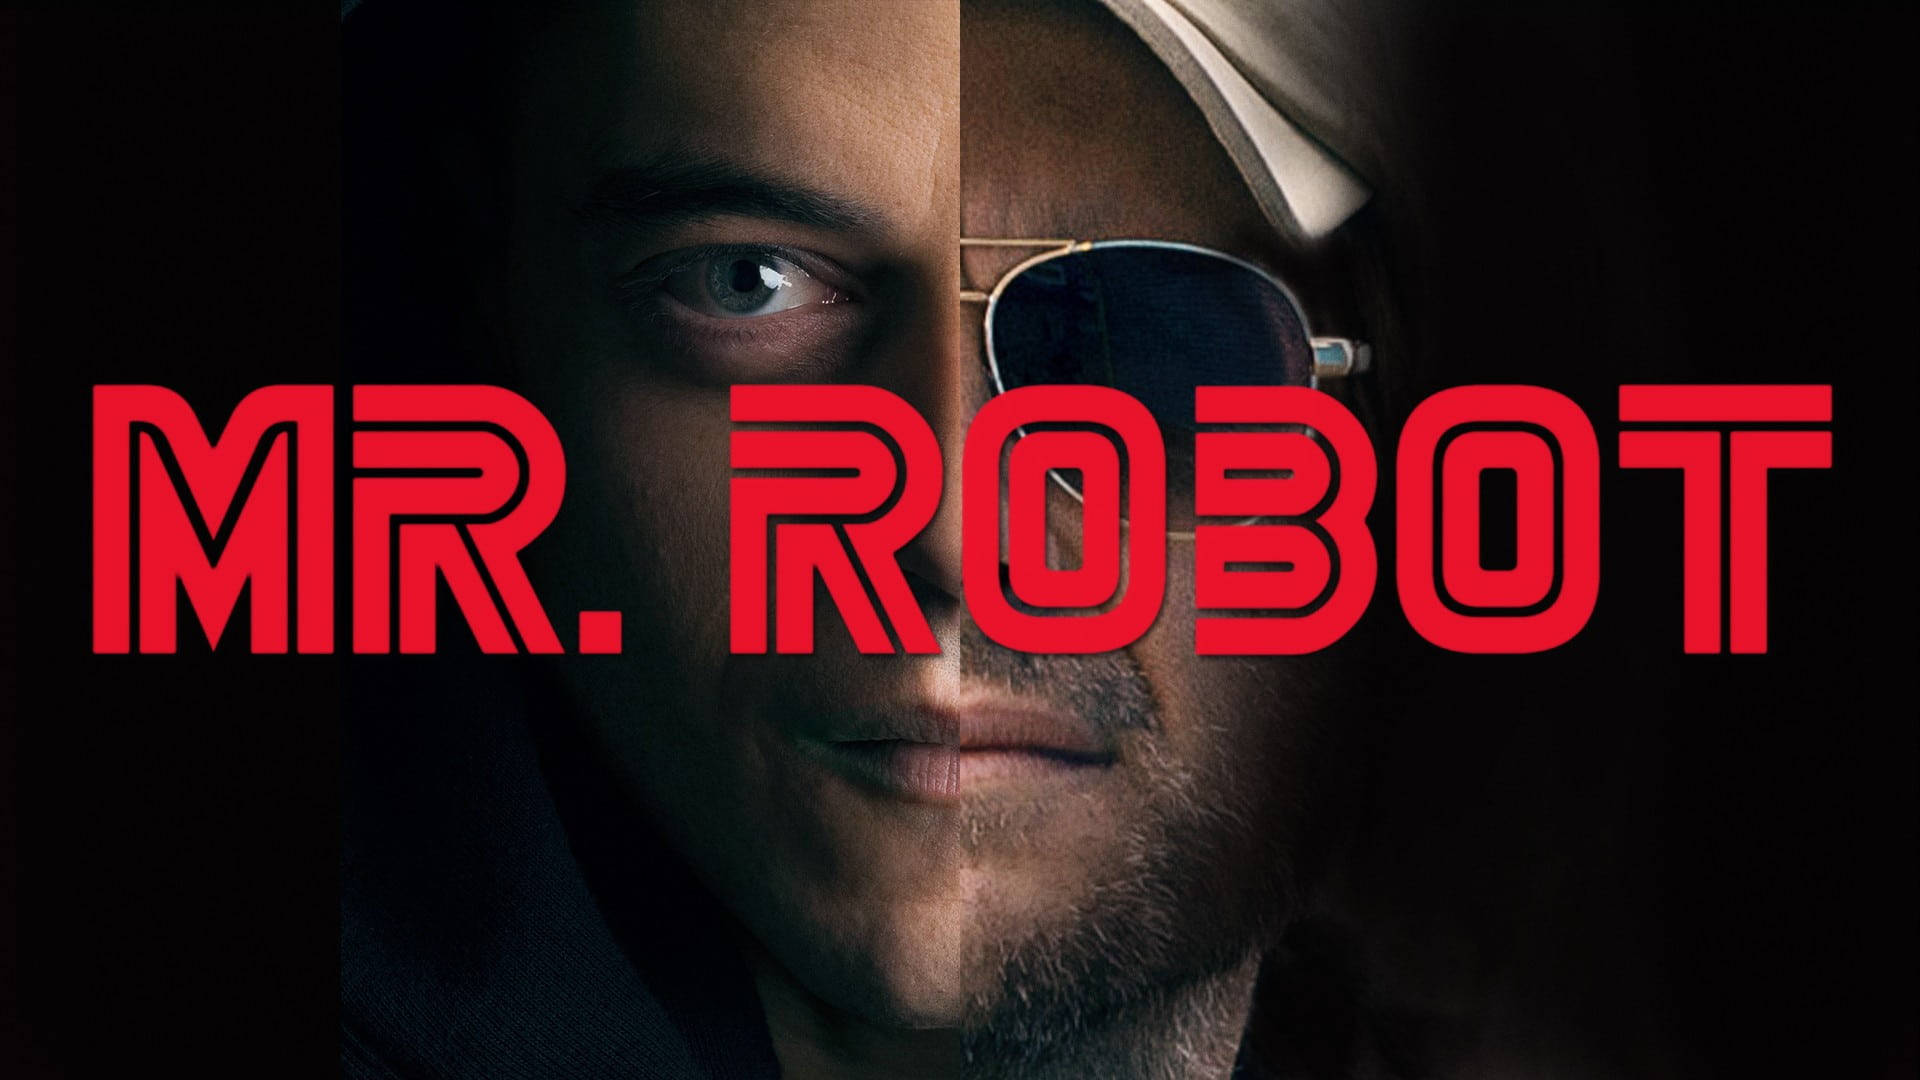 Mr. Robot Climactic Scene From Season 1 Background